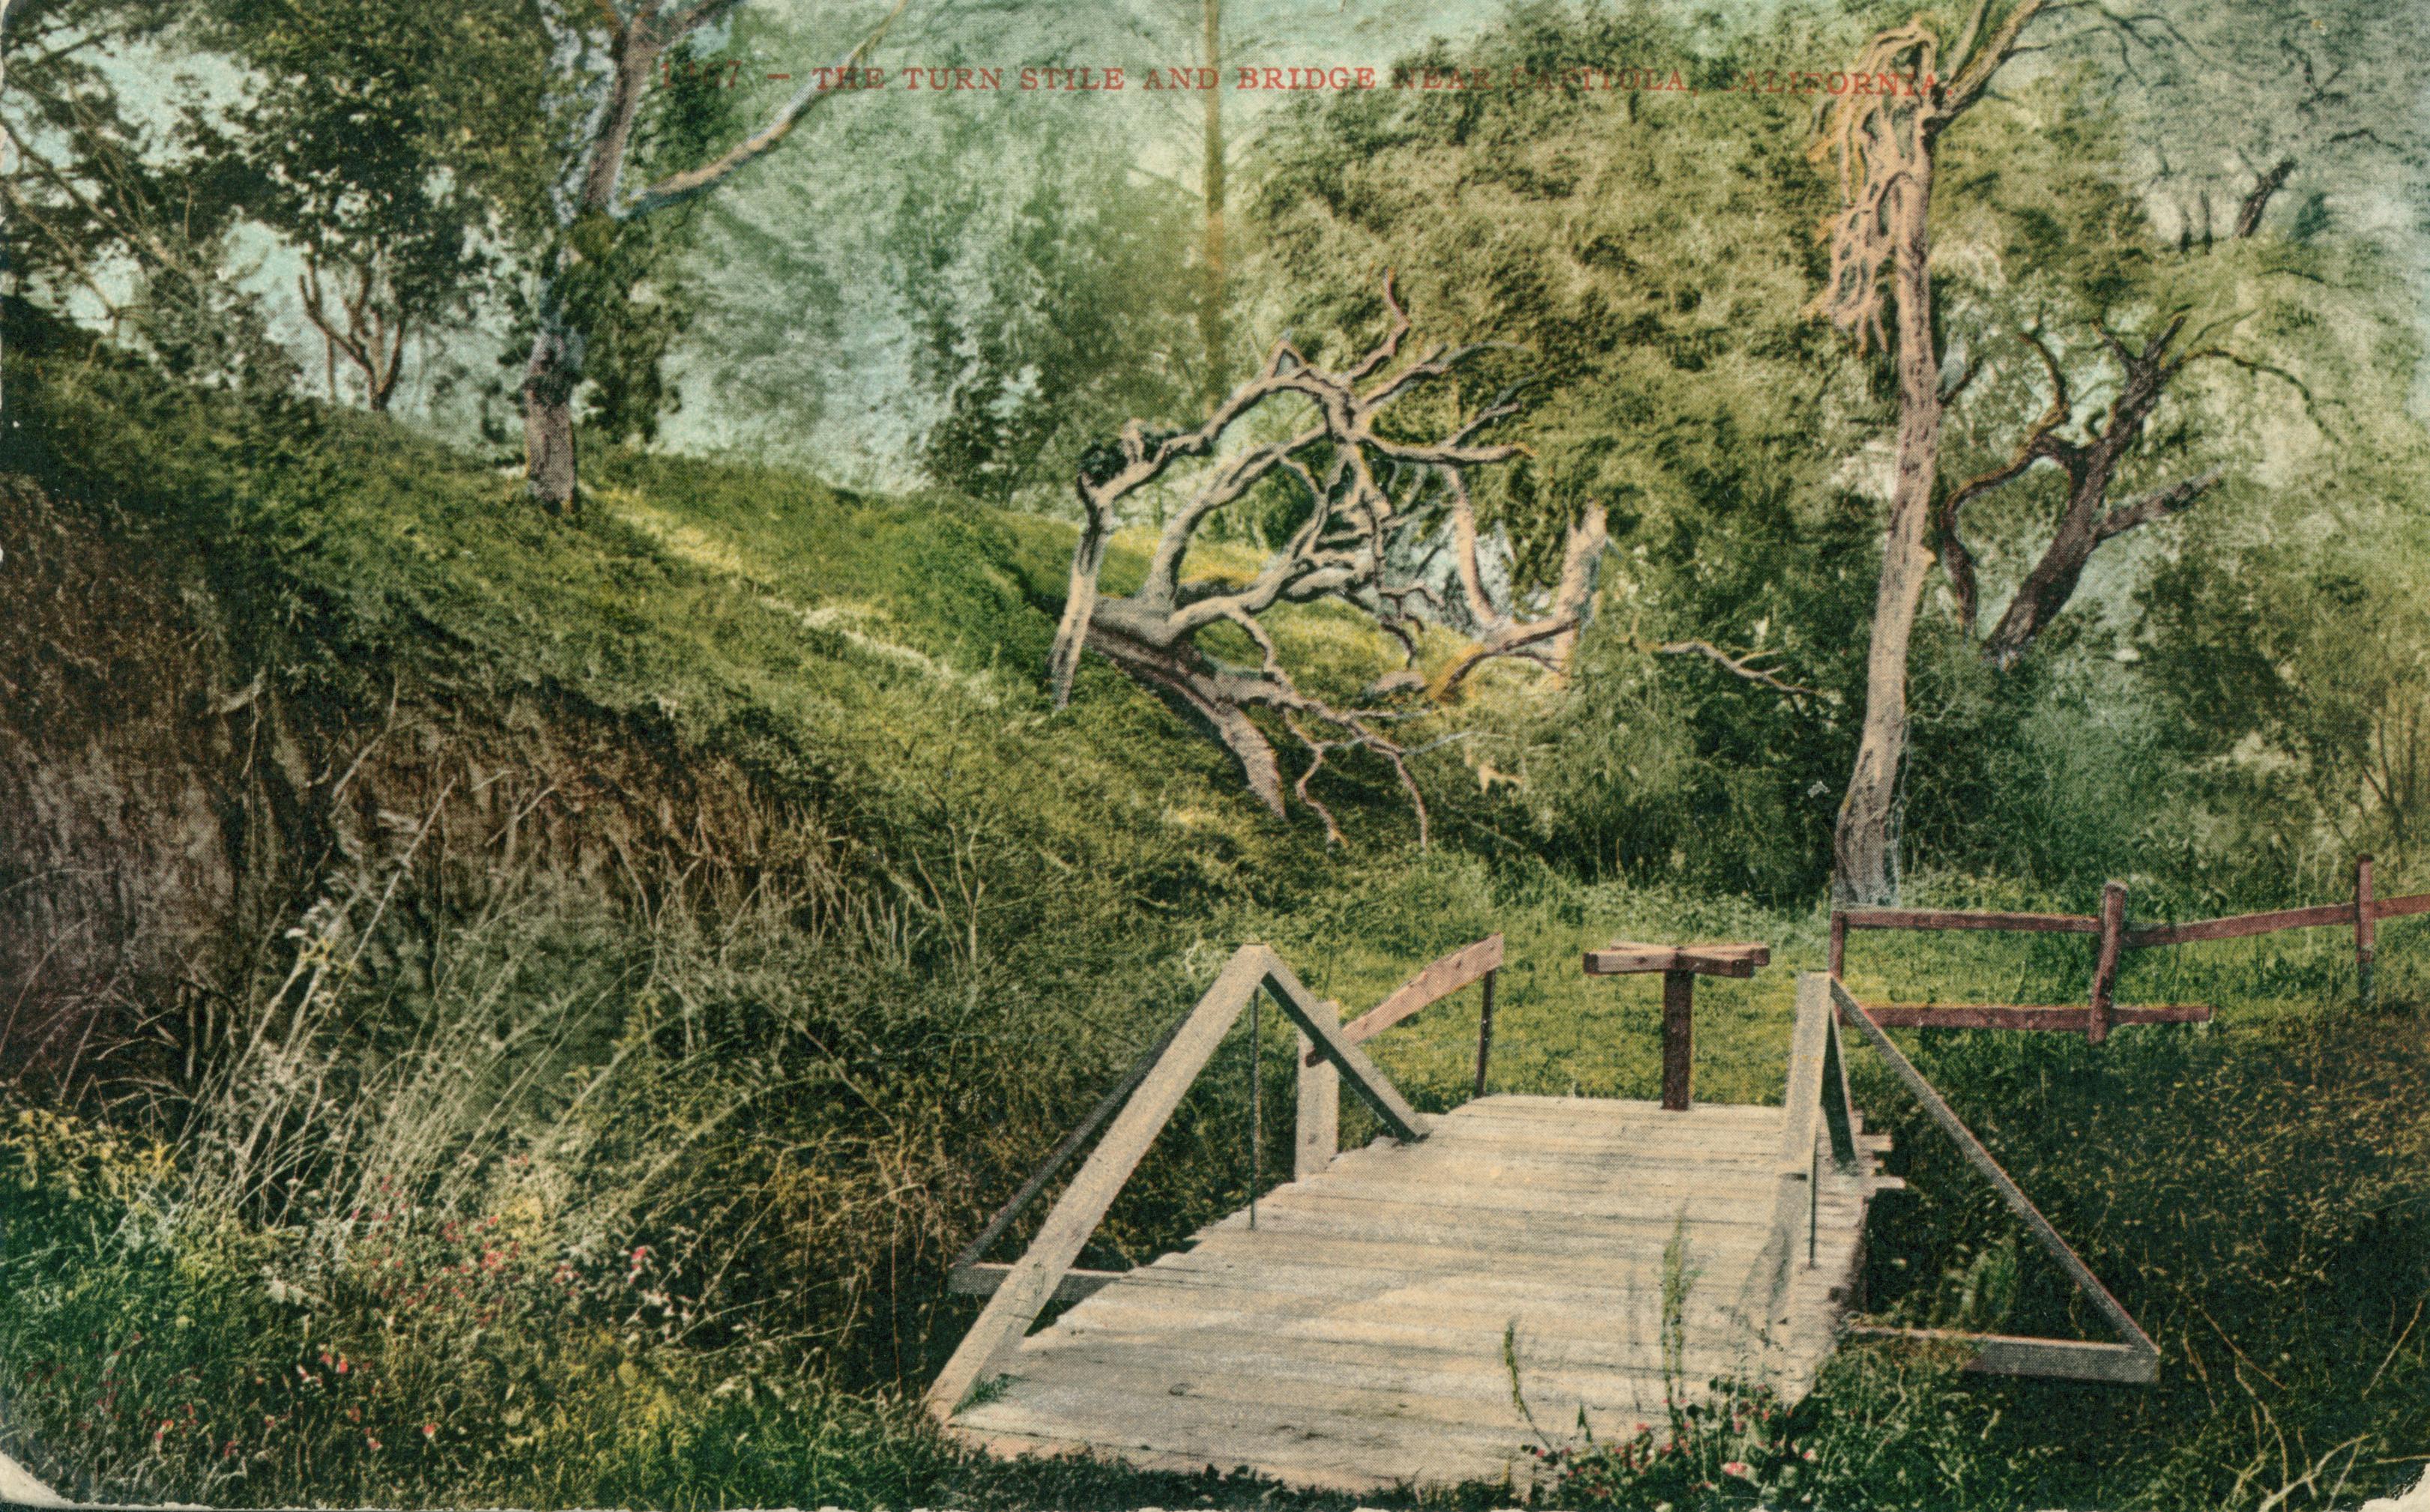 The turn stile and bridge near Capitola, California, green hill, trees